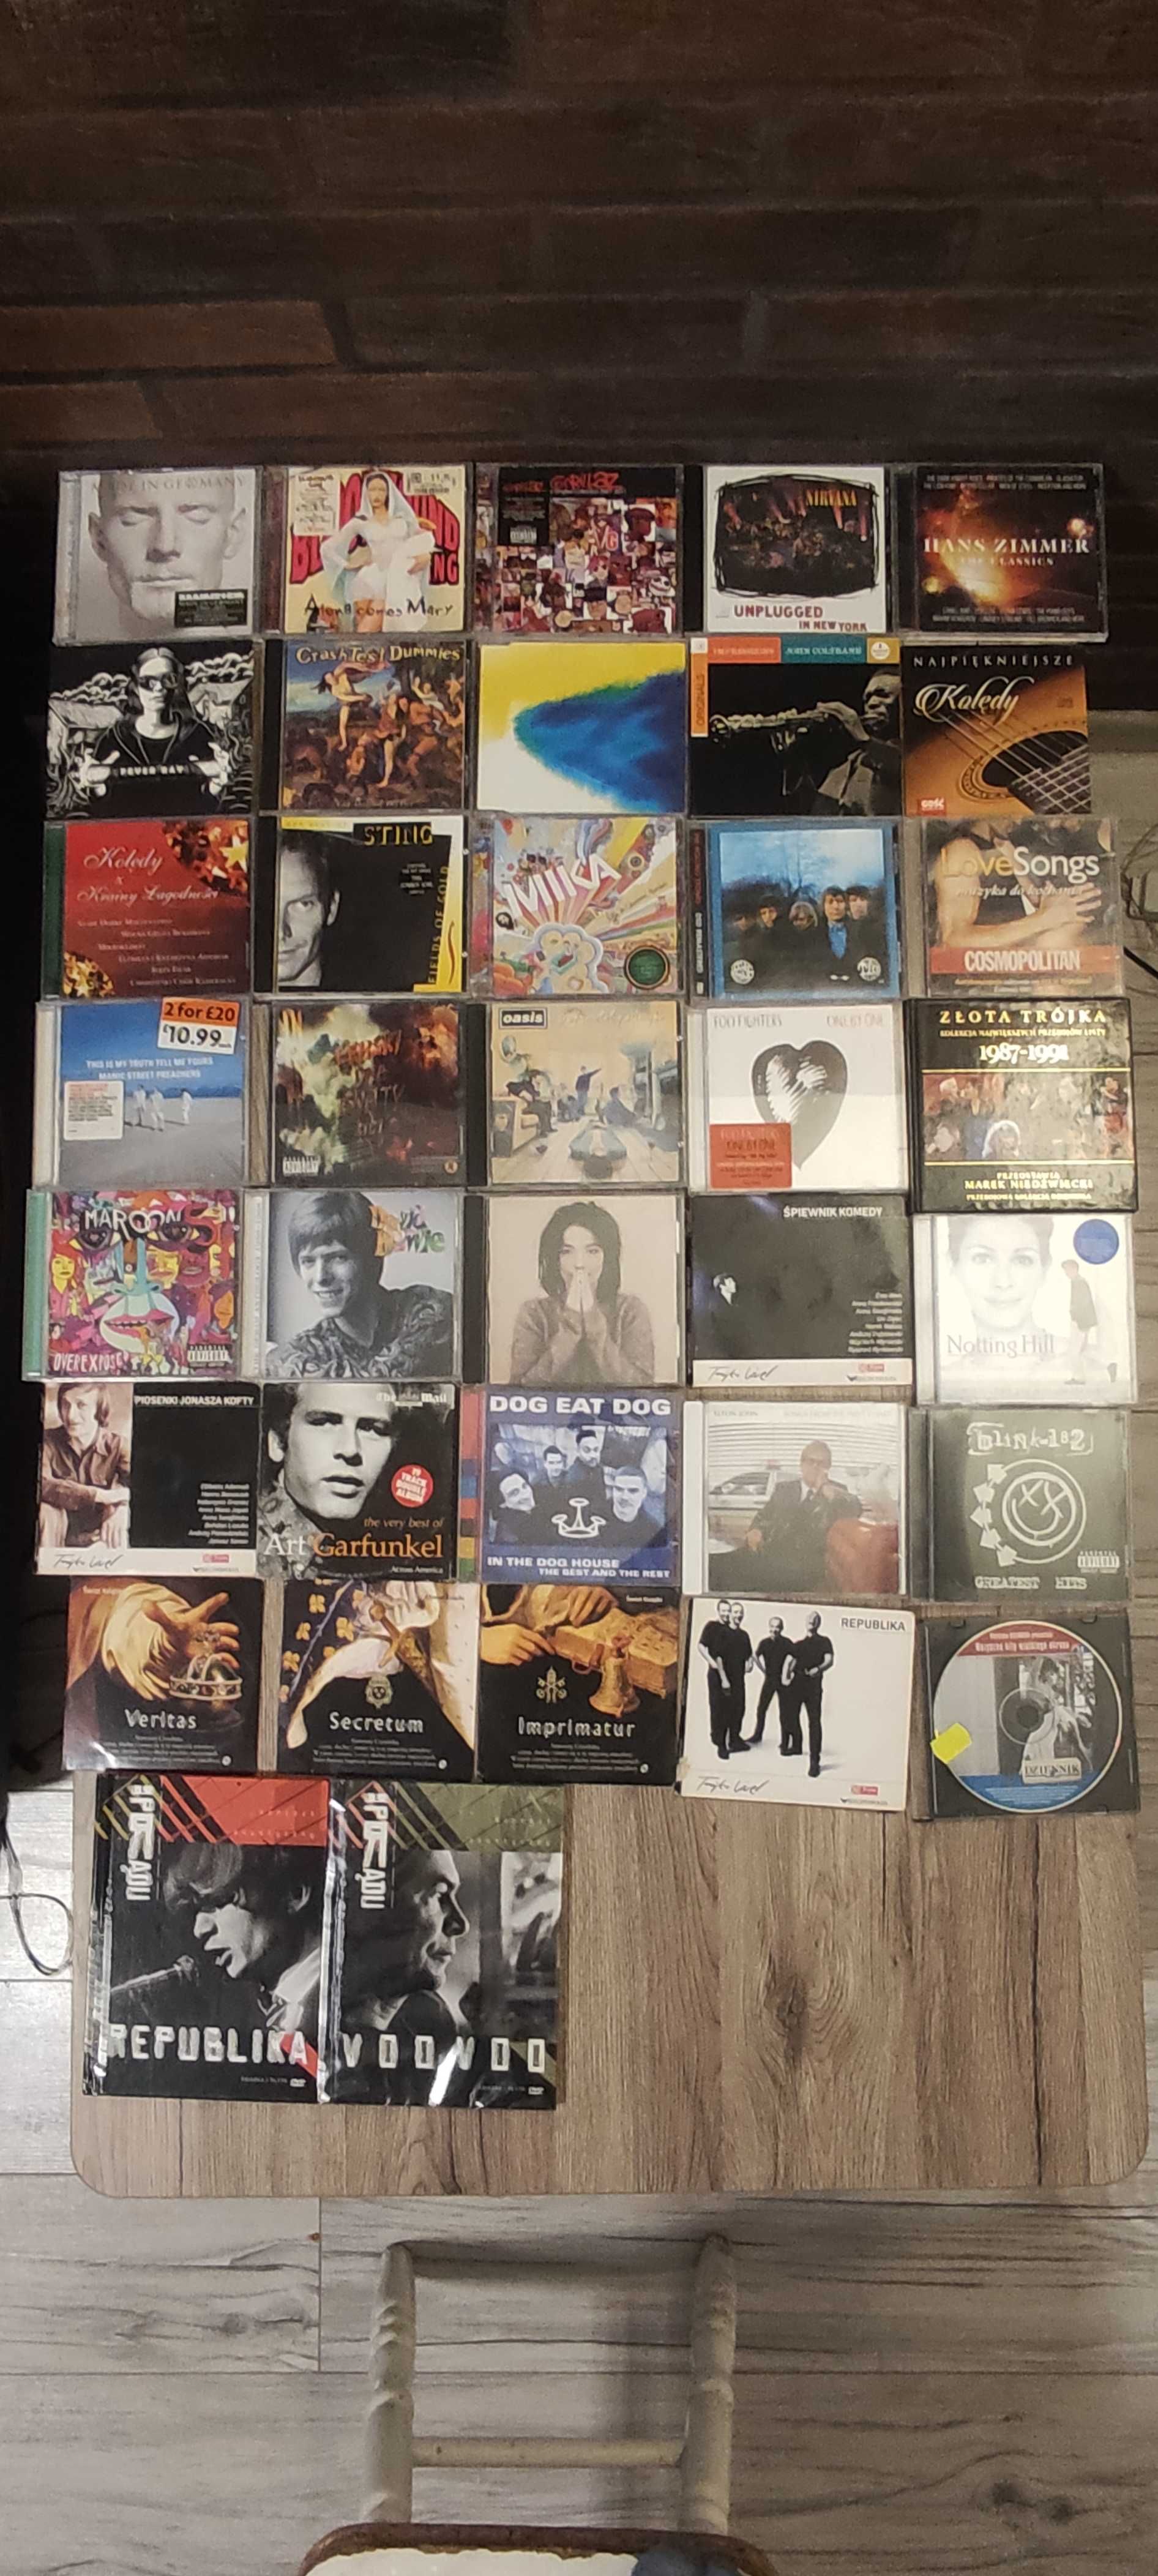 Bardzo duża kolekcja płyt CD (ponad 170 płyt), kilka unikatów